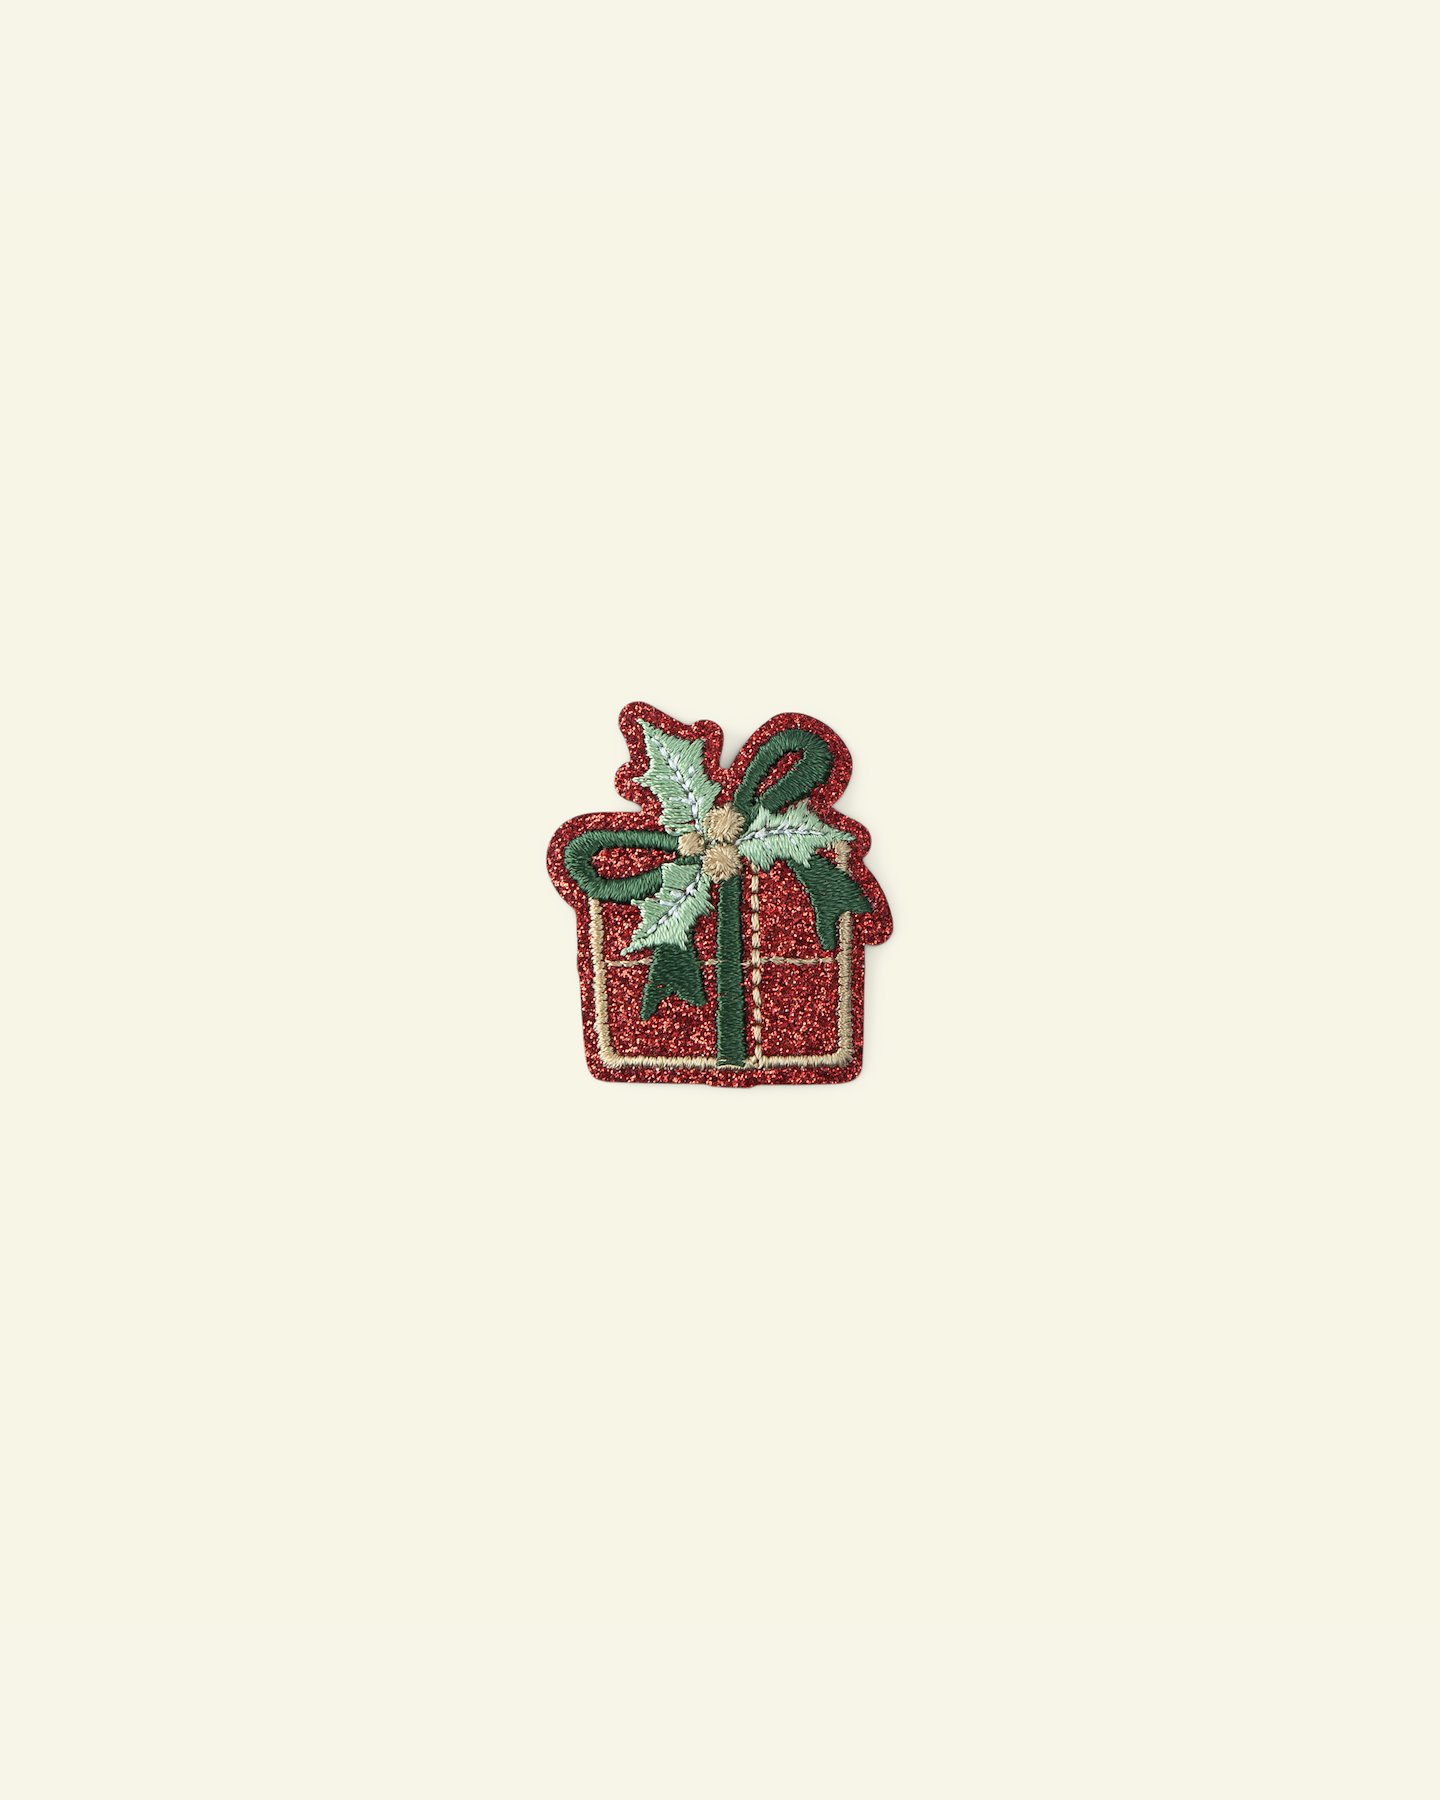 Symerke julepakke 40x37mm rød/grønn 24959_pack